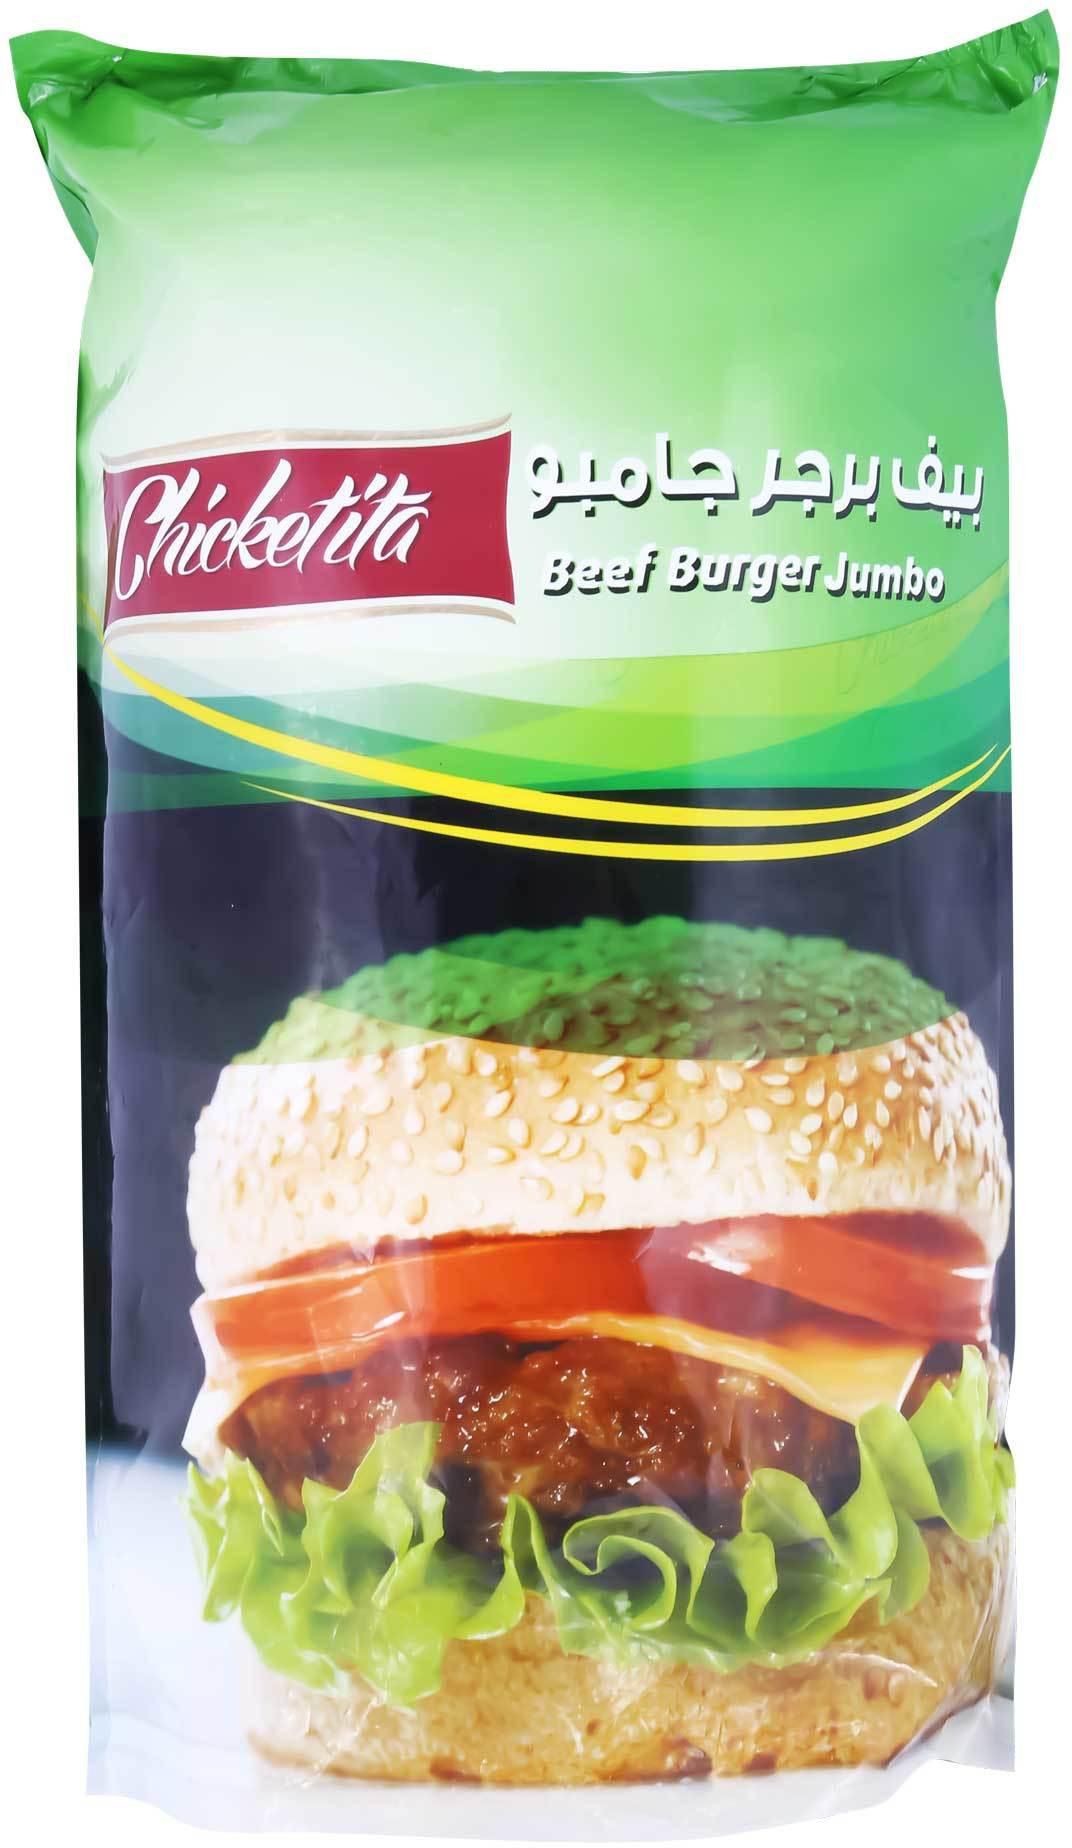 Chicketita Jumbo Beef Burger - 1.5 Kg